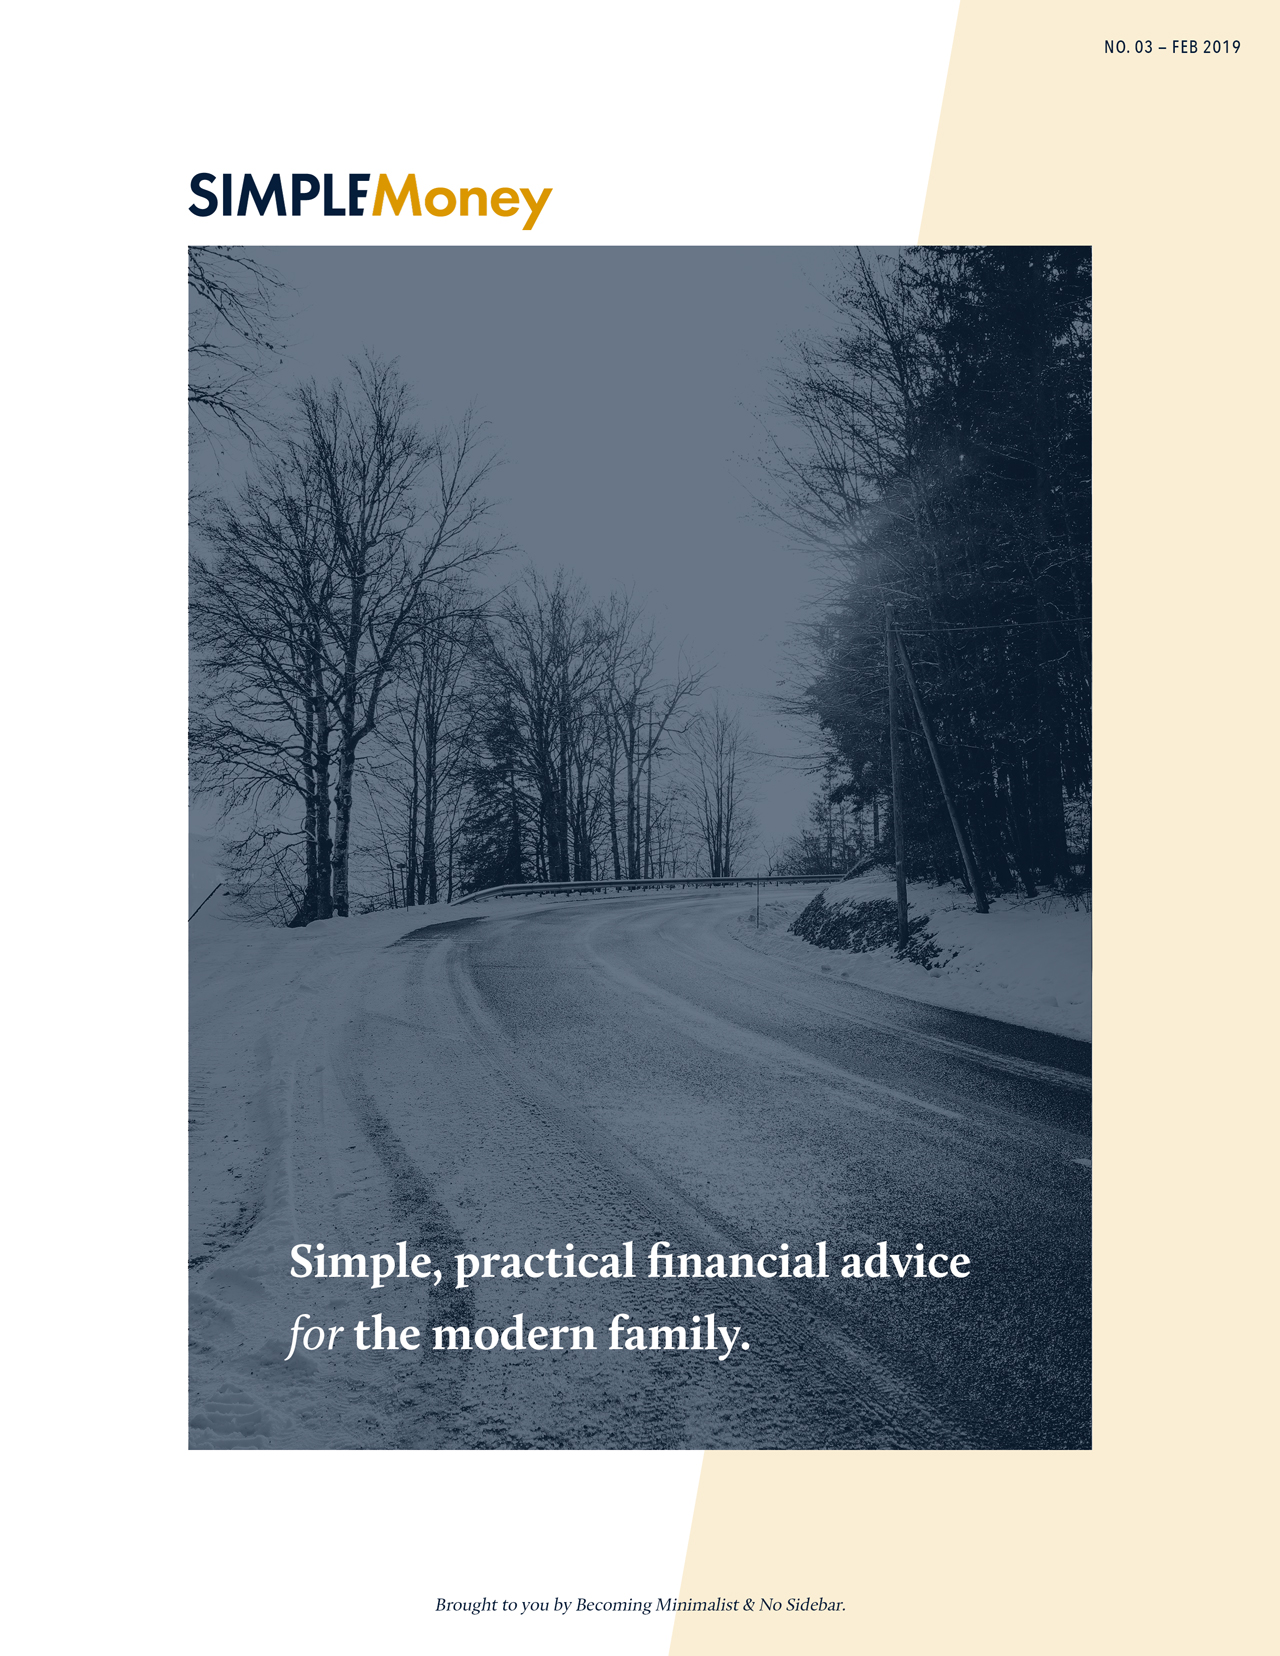 Simple Money Magazine Issue #03